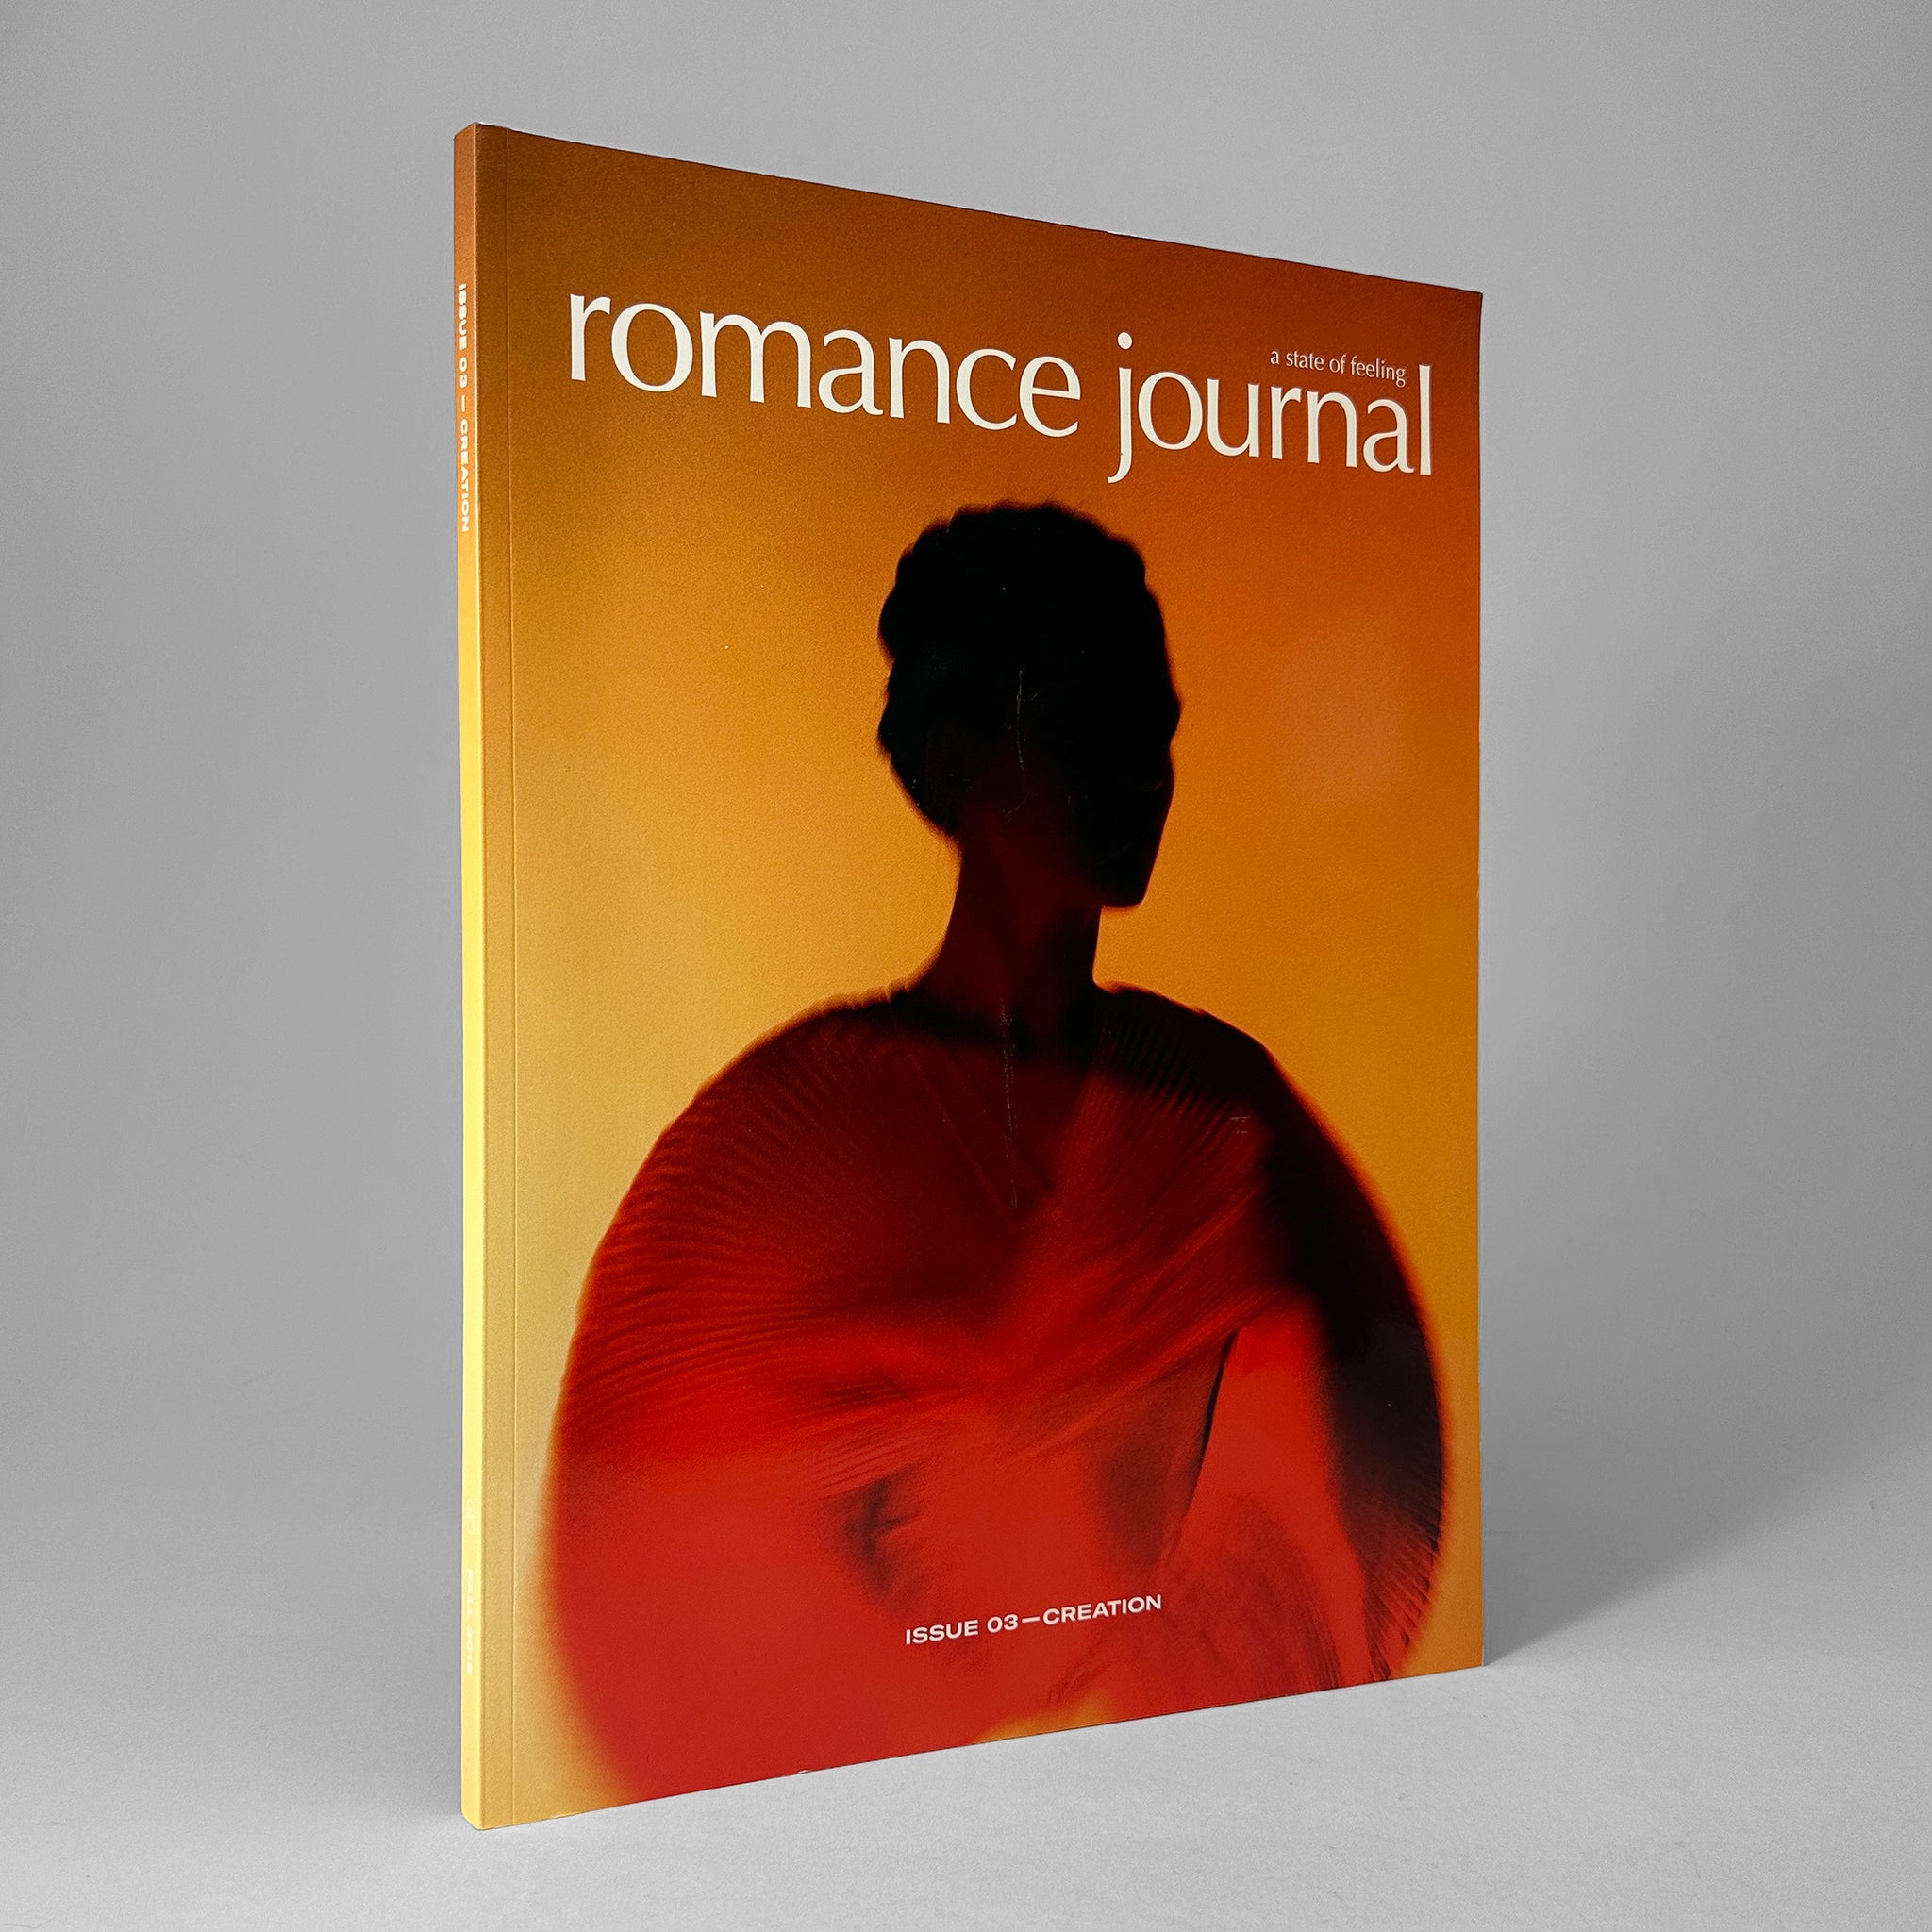 Romance Journal: Issue 03 - Creation